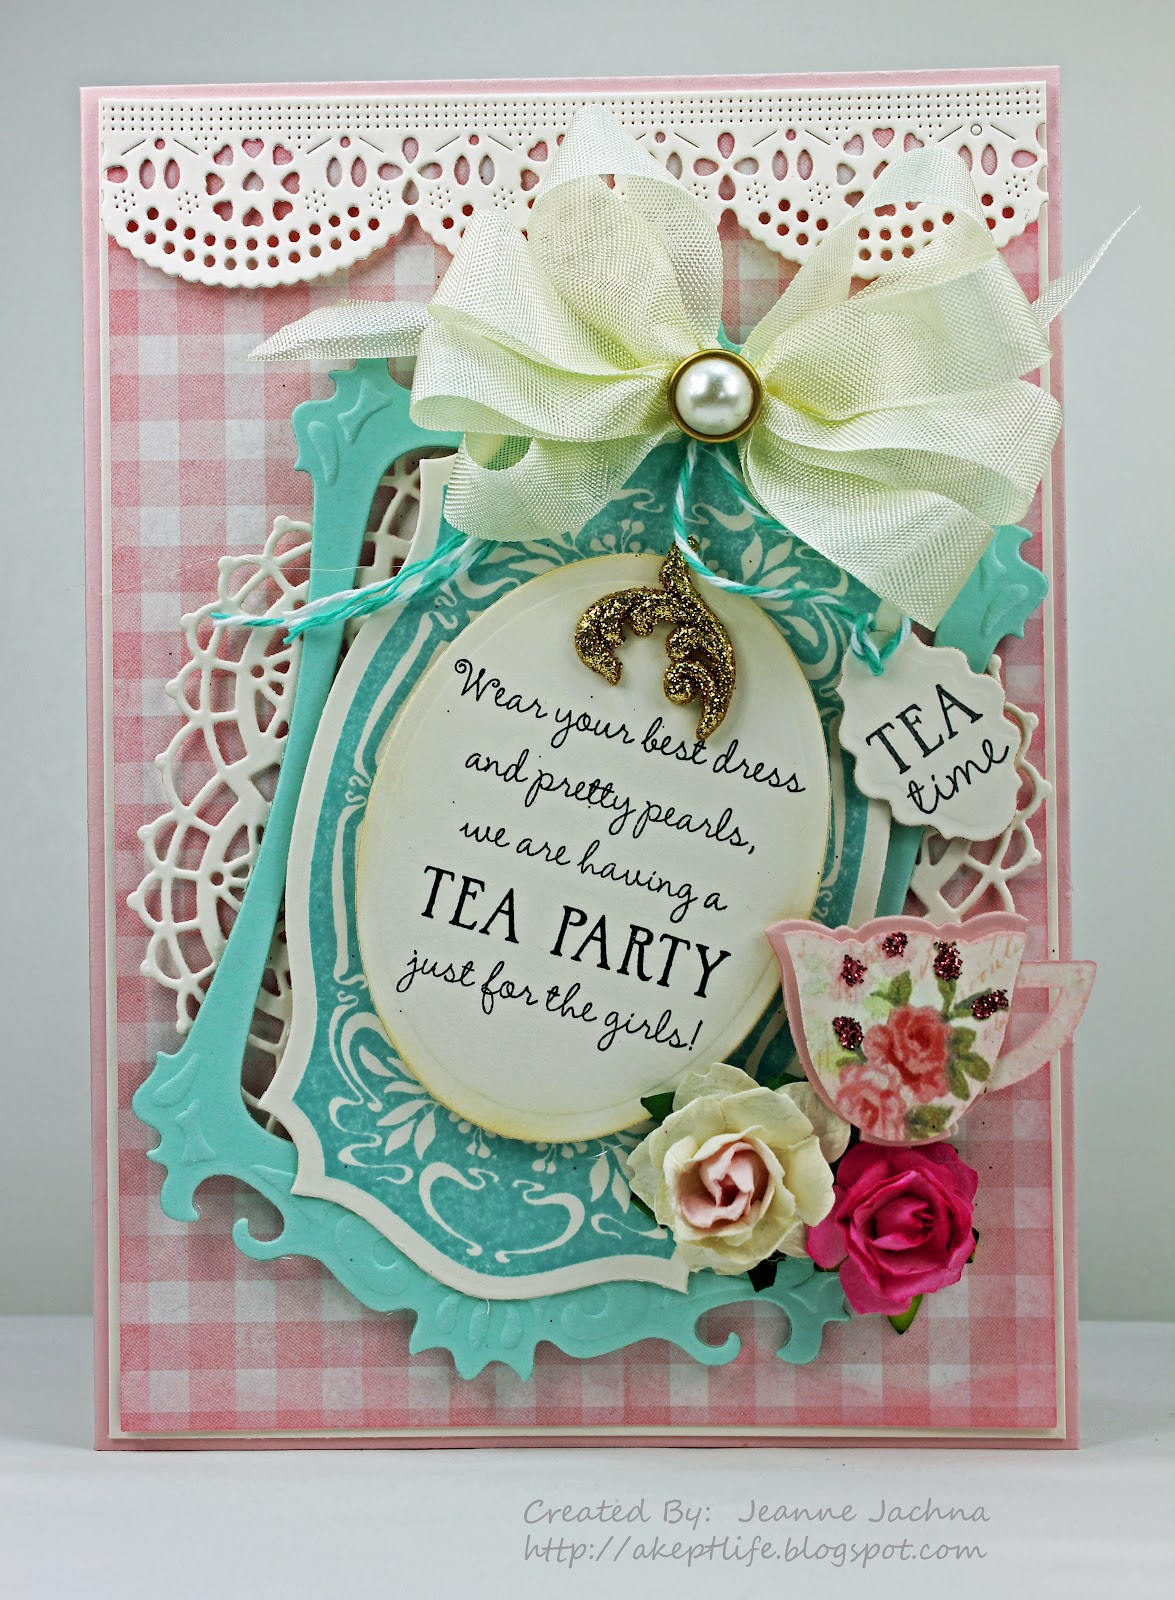 Tea Party Invite Ideas
 33 Beautiful Tea Party Decorations